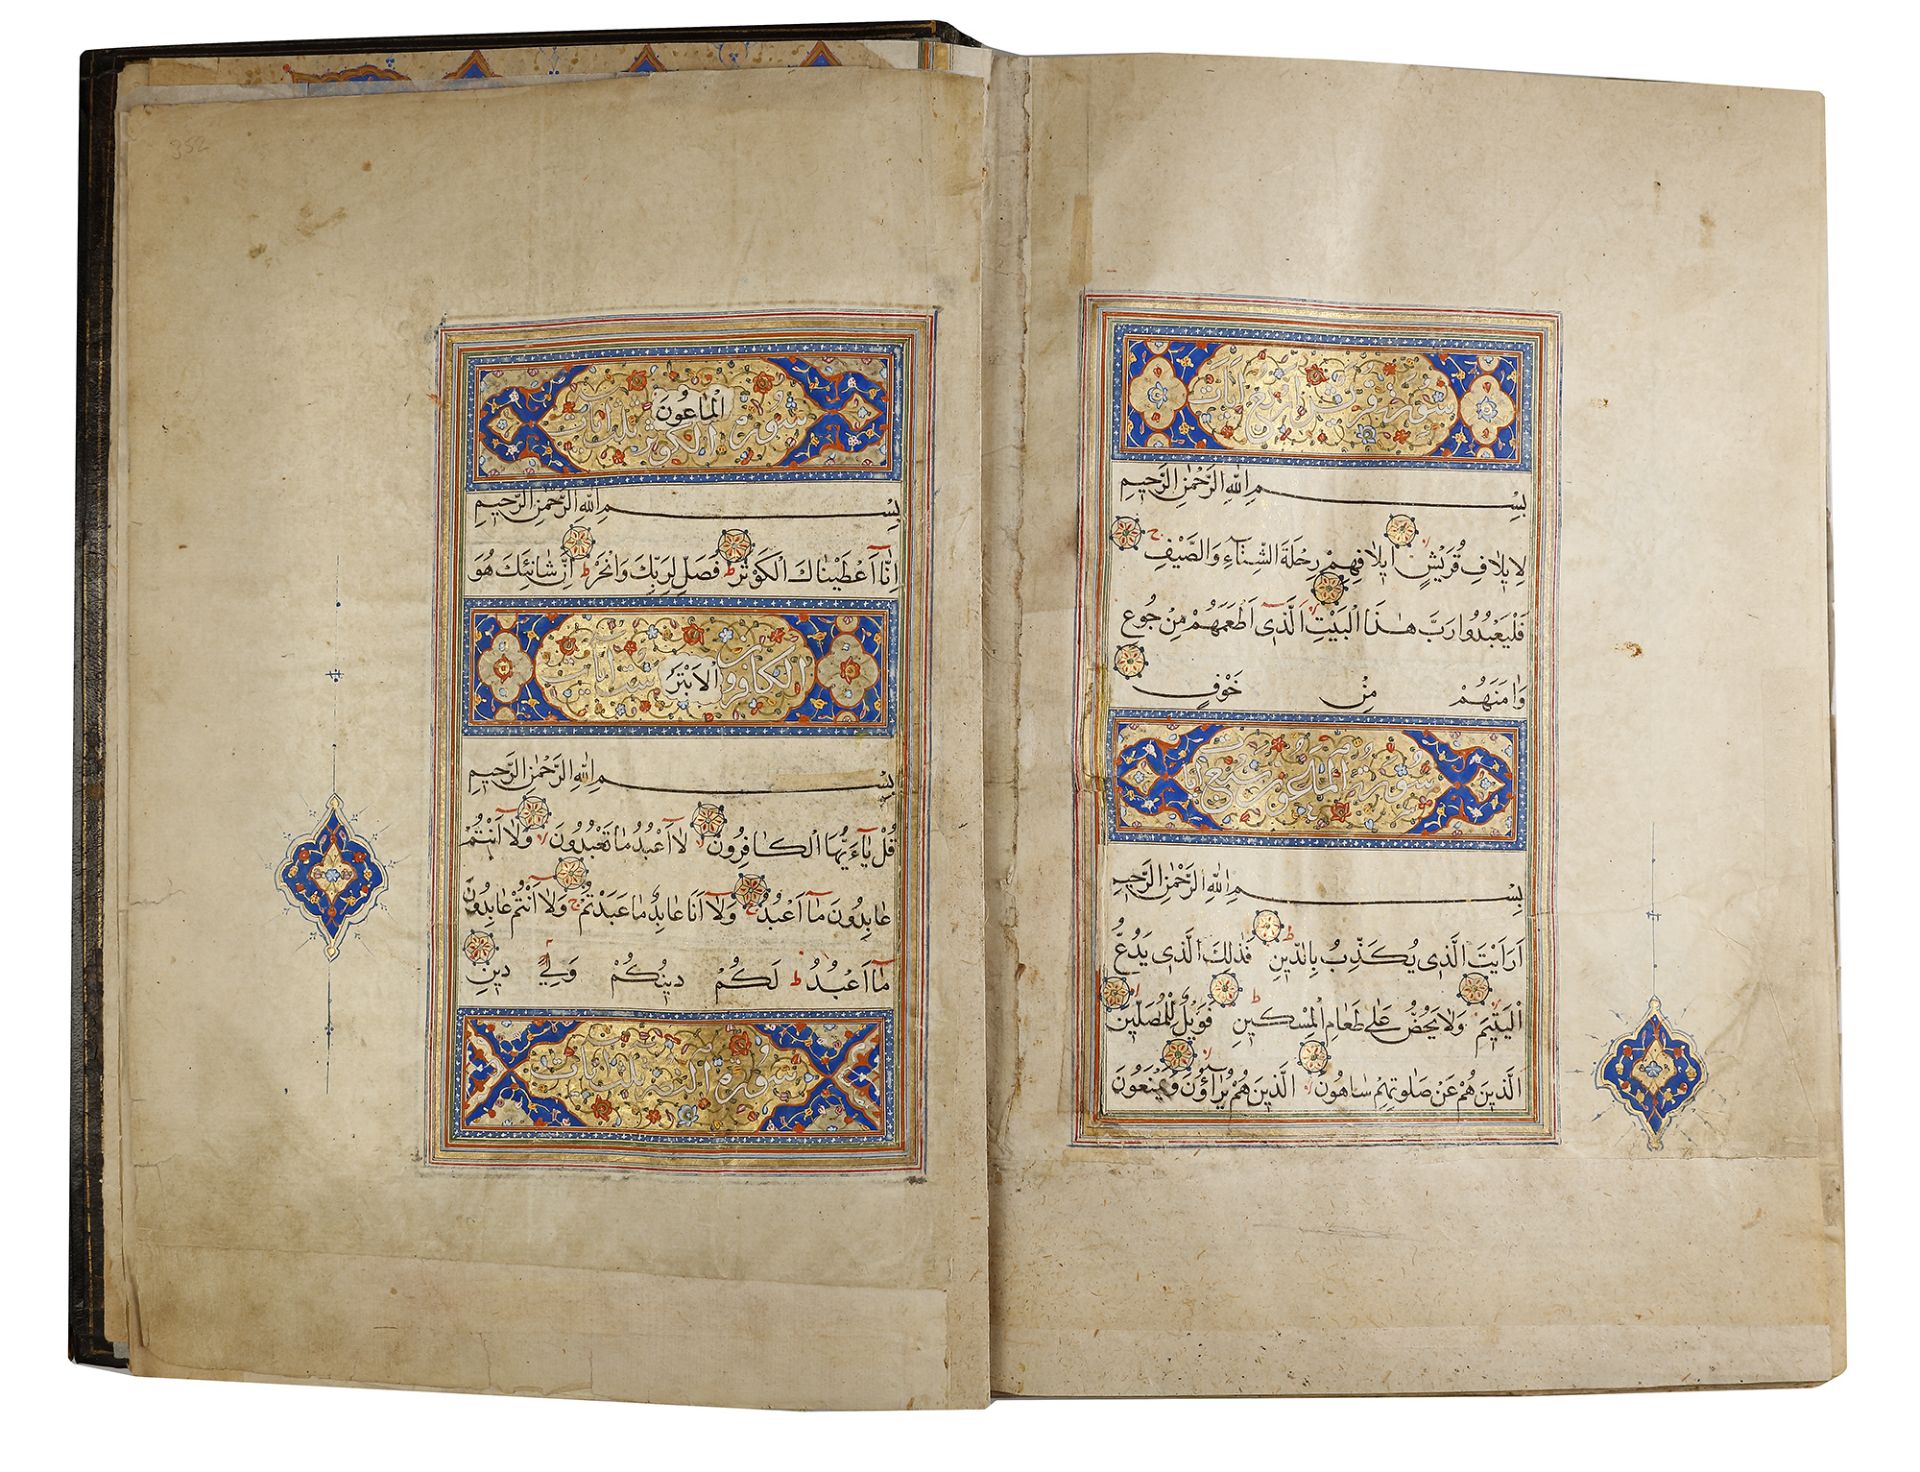 A LARGE ILLUMINATED QURAN, COPIED BY 'ALA'-AL-DIN MUHAMMAD AL-TABRIZI SAFAVID, PERSIA, 16TH CENT - Image 19 of 26